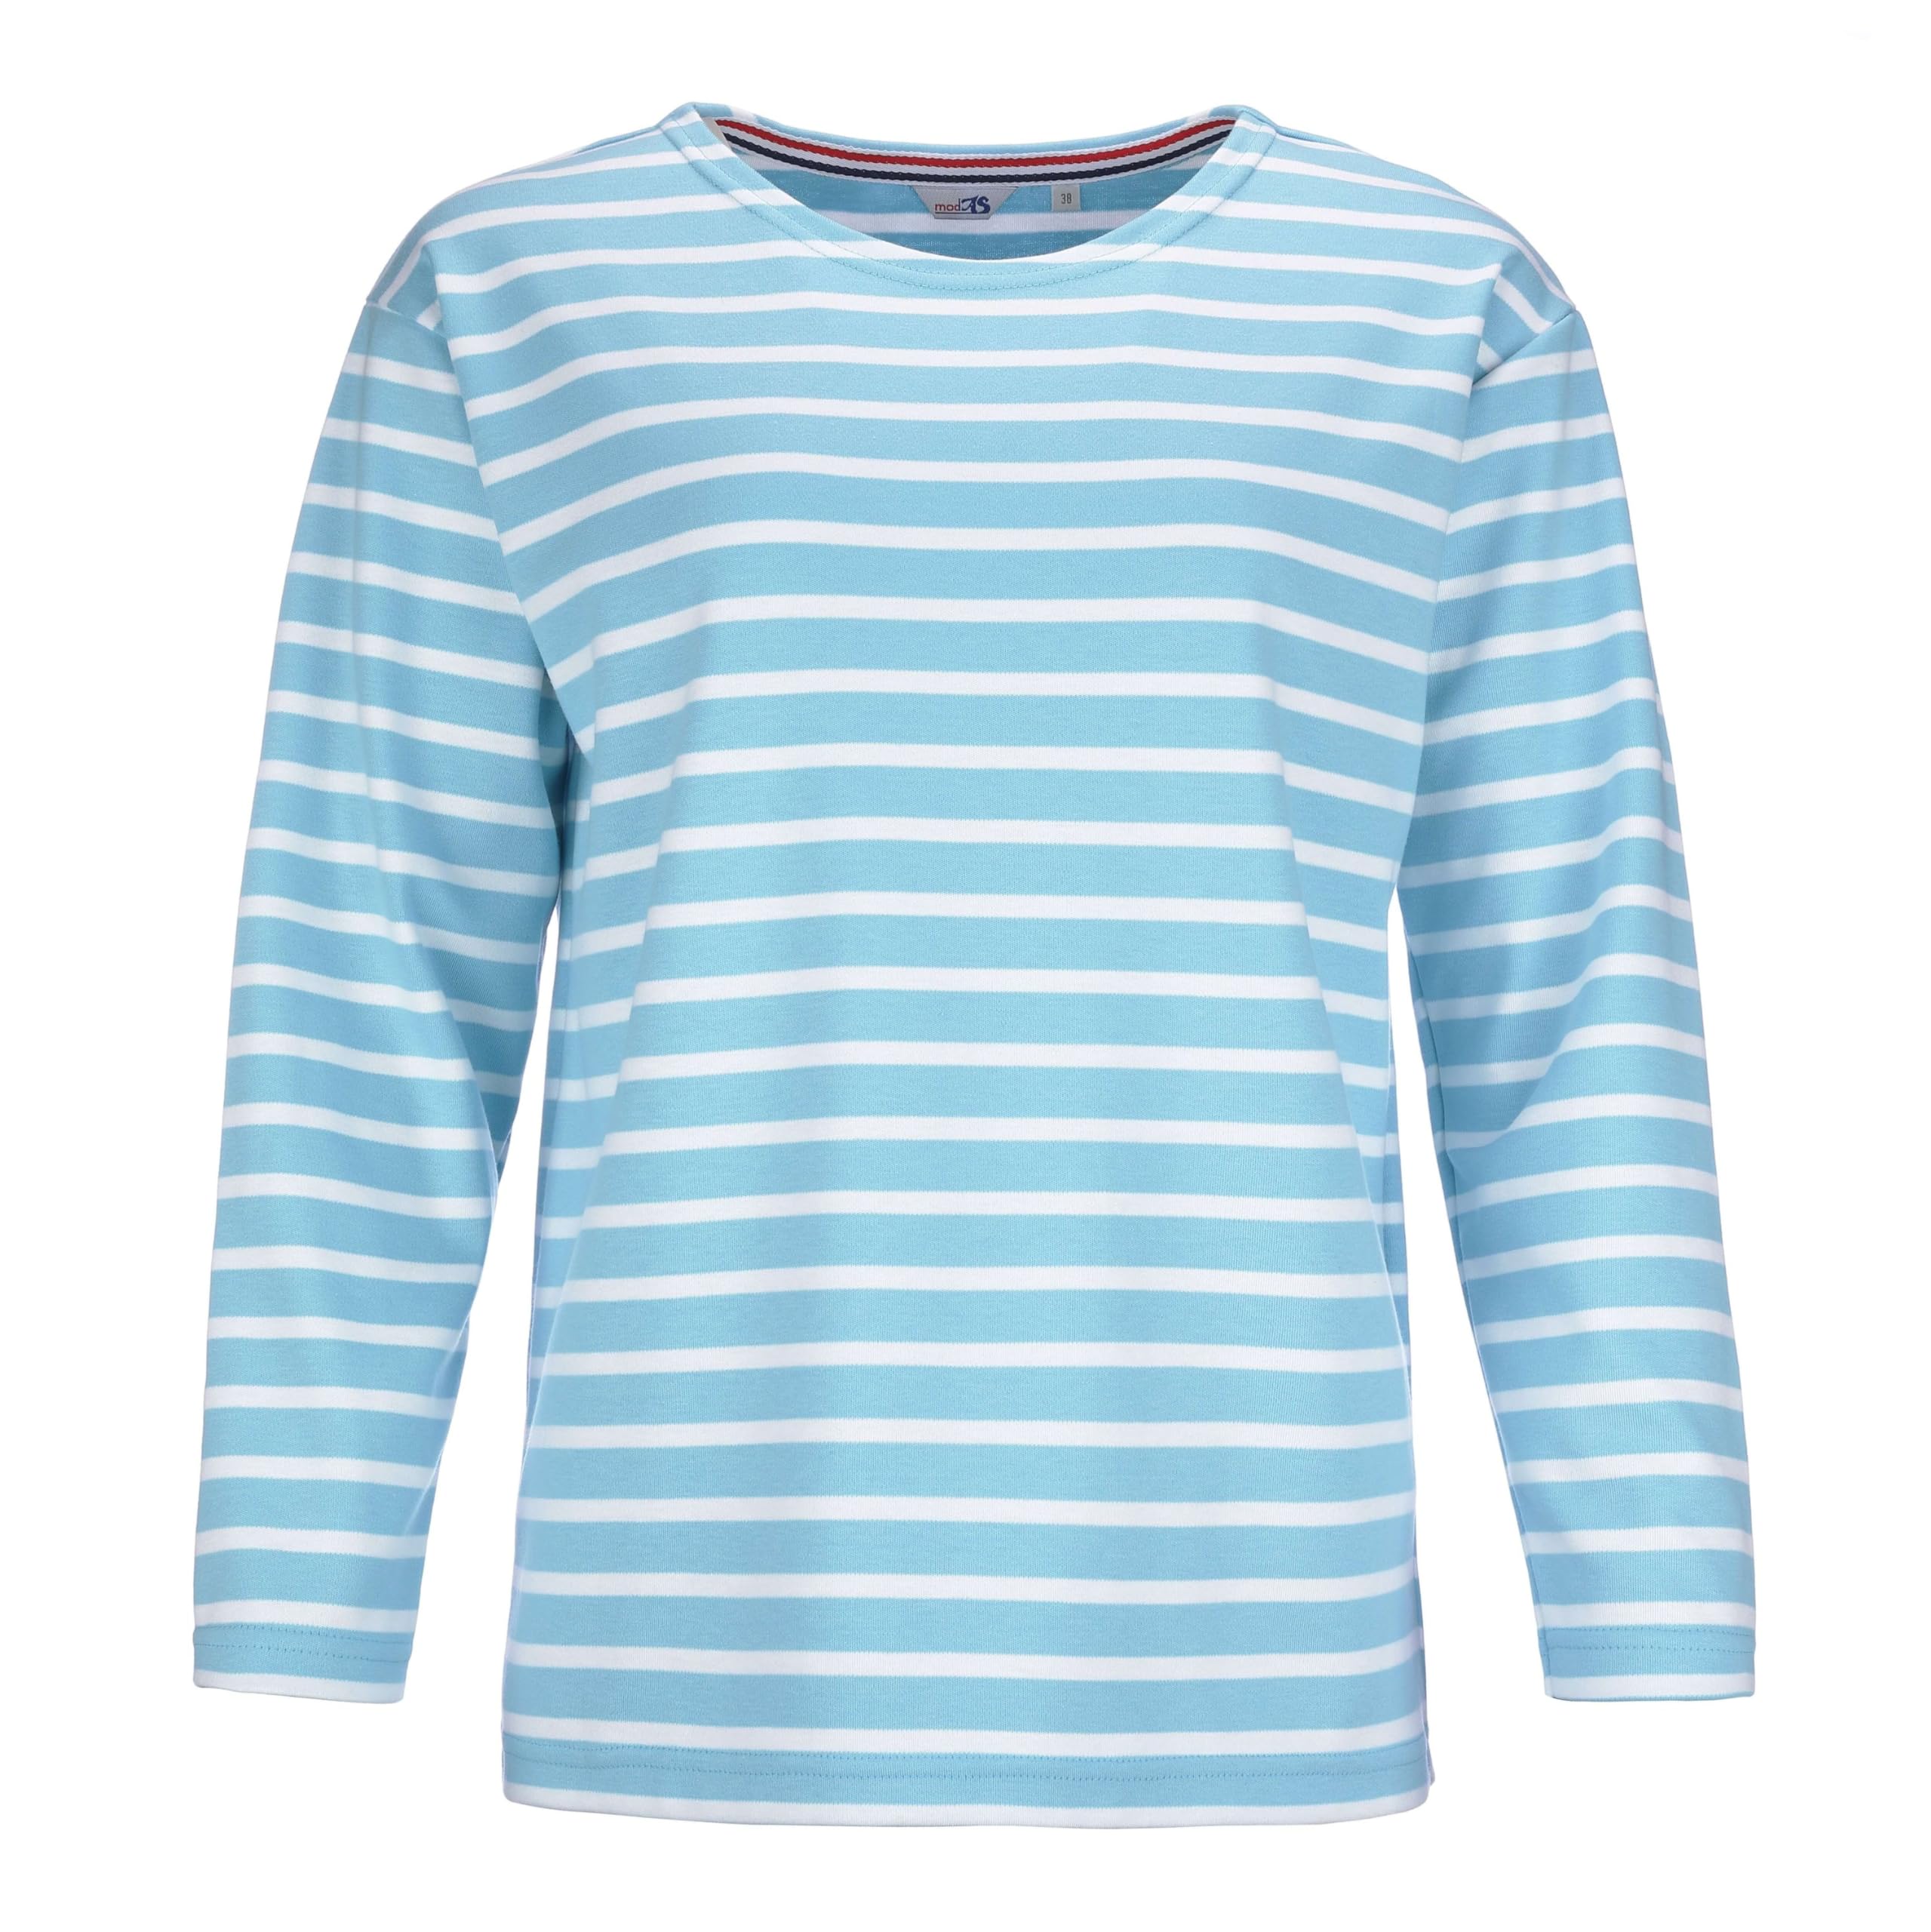 modAS Damen Langarmshirt Bretonisches Basic Shirt - Ringelshirt Streifenshirt Longsleeve Shirt mit Streifen aus Baumwolle in Aqua/Weiß Größe 50